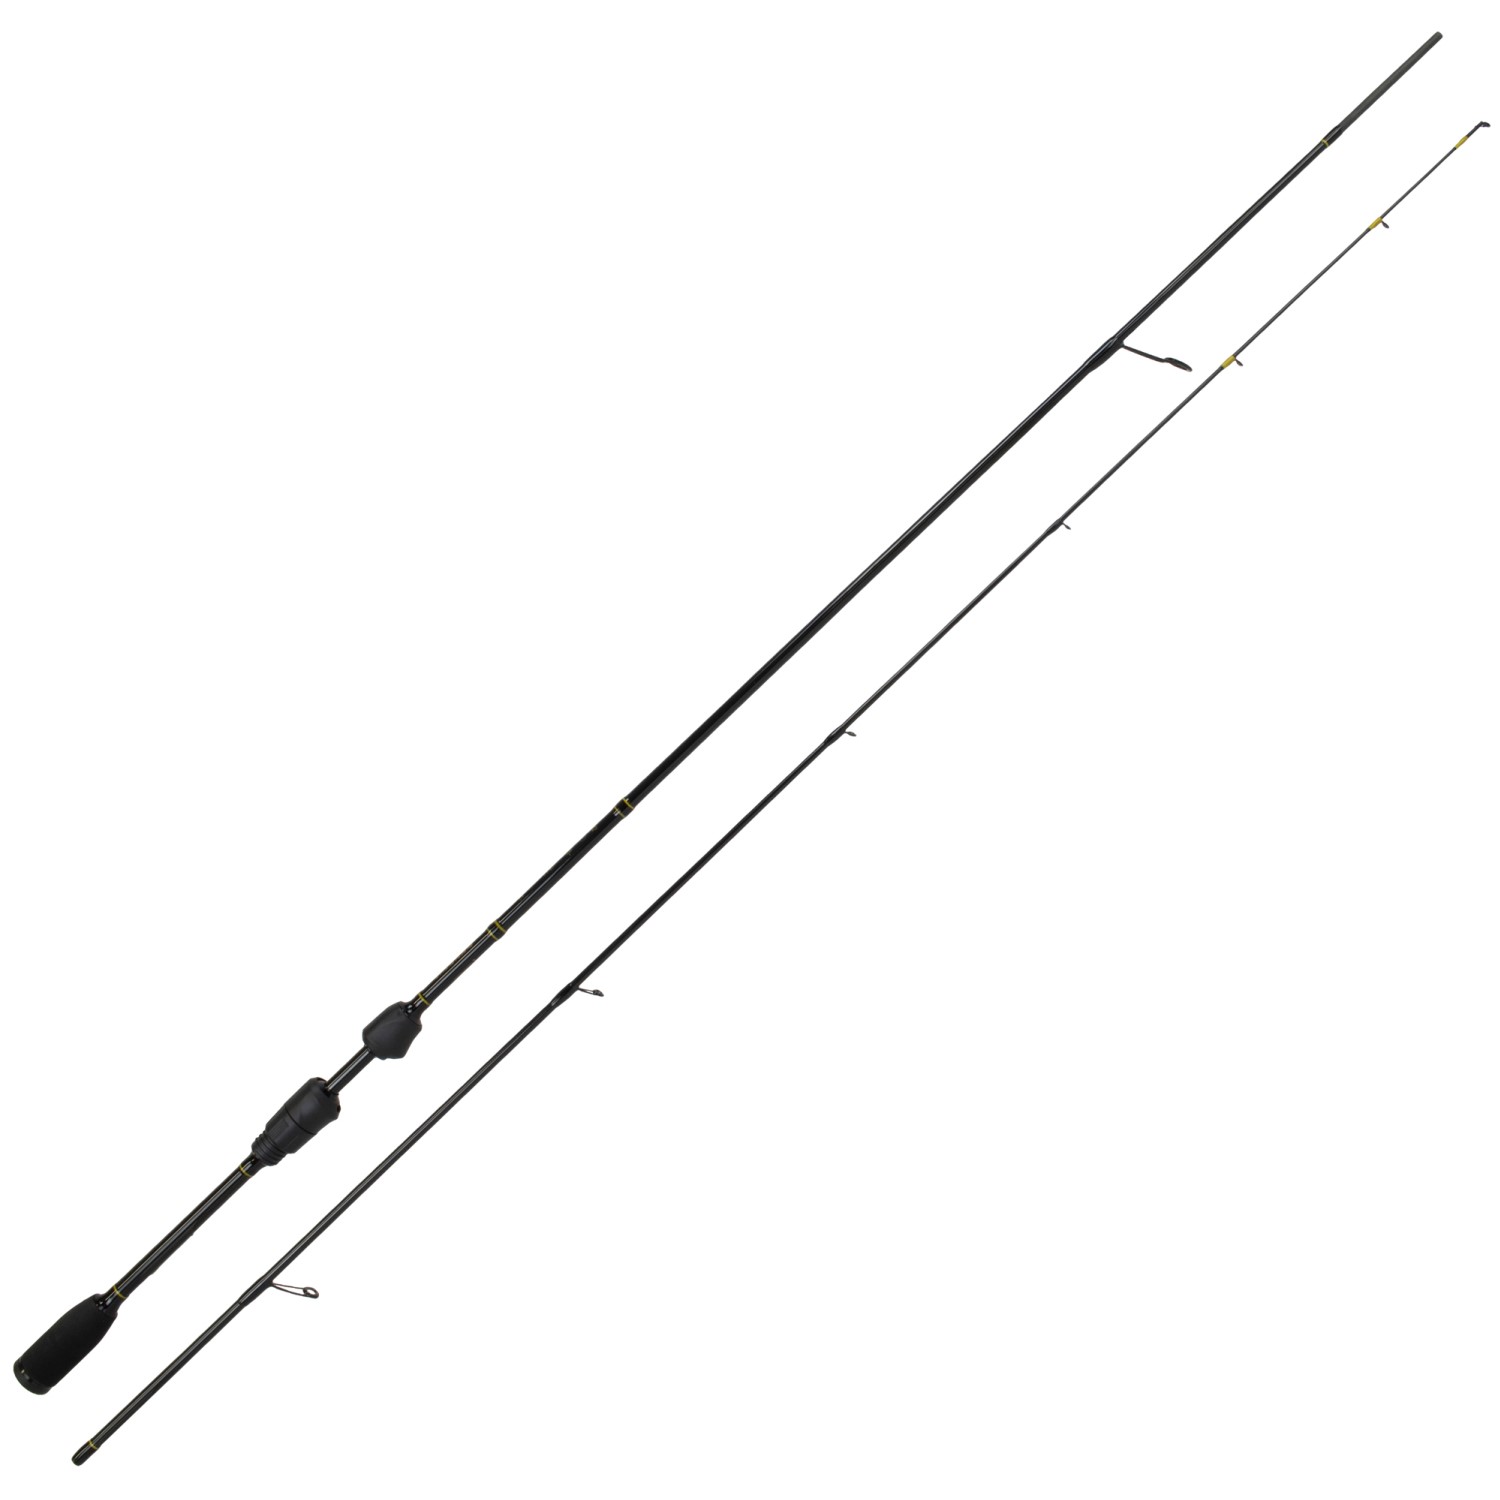 Senshu Finesse Stick Spinnrute Ultra light-Rute 1,98-2,25m Barschrute Forelle